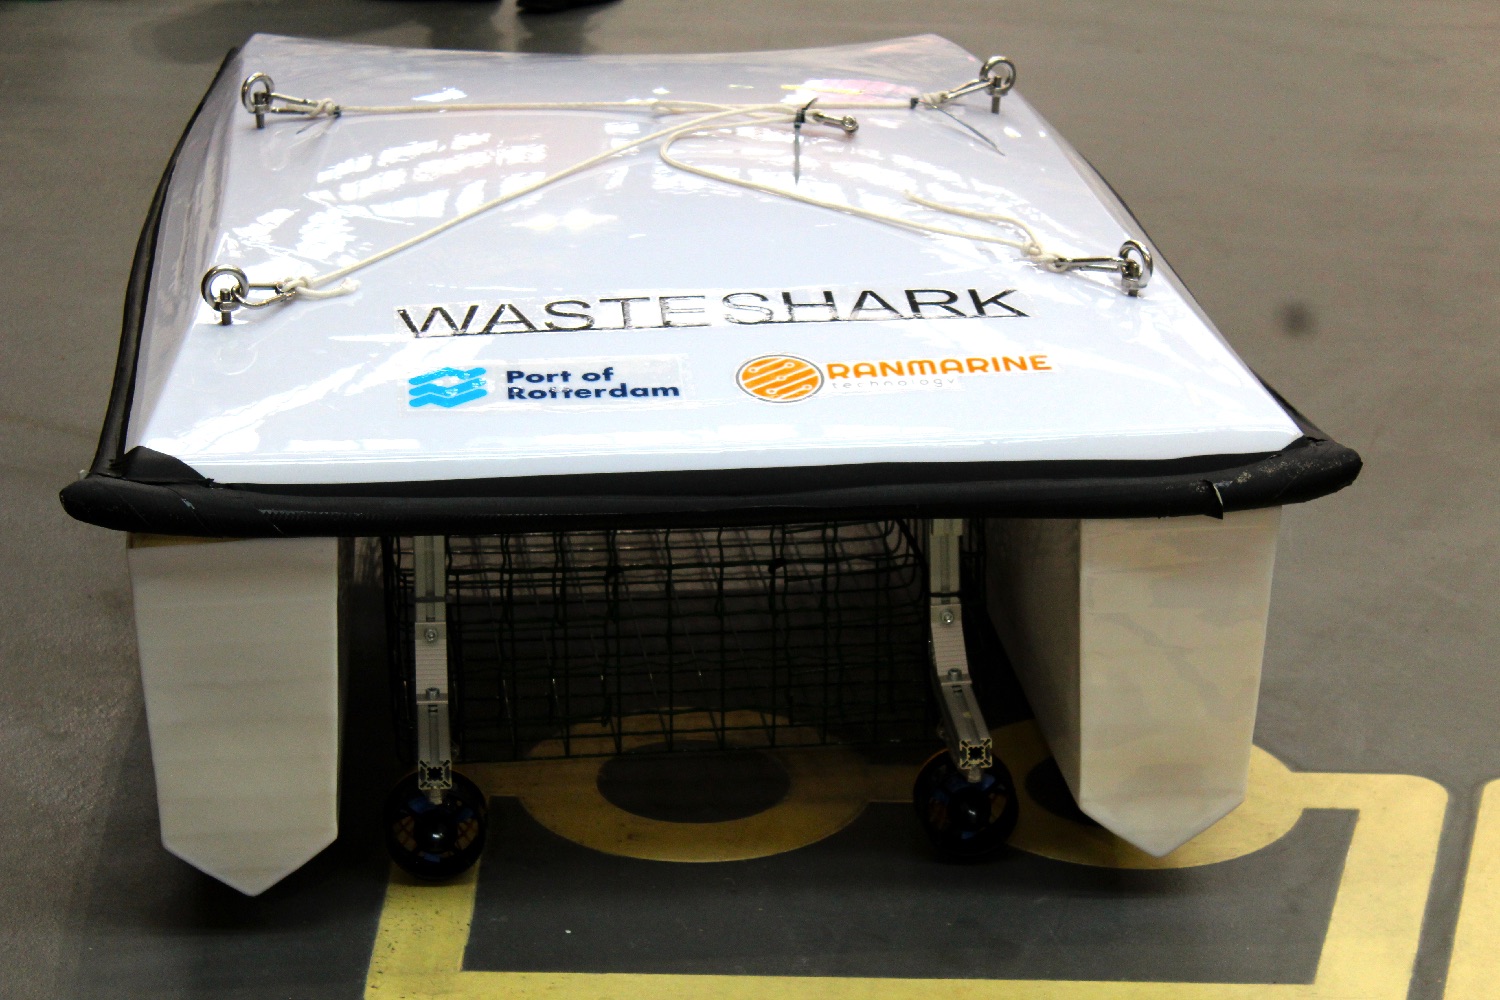 drone wasteshark img 0457